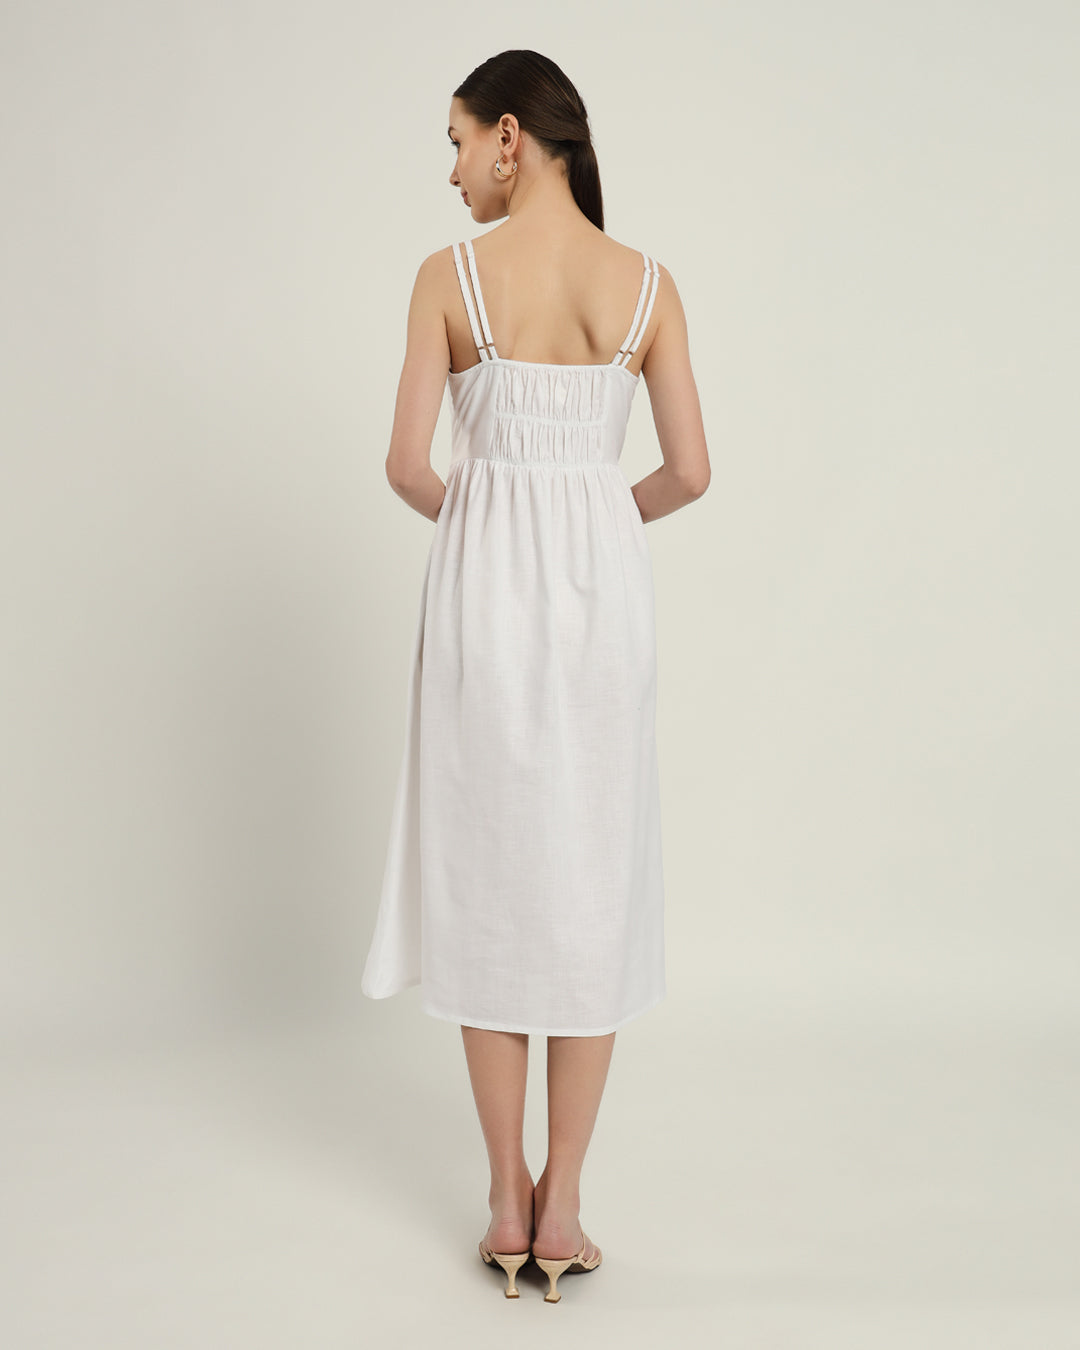 The Haiti Daisy White Linen Dress